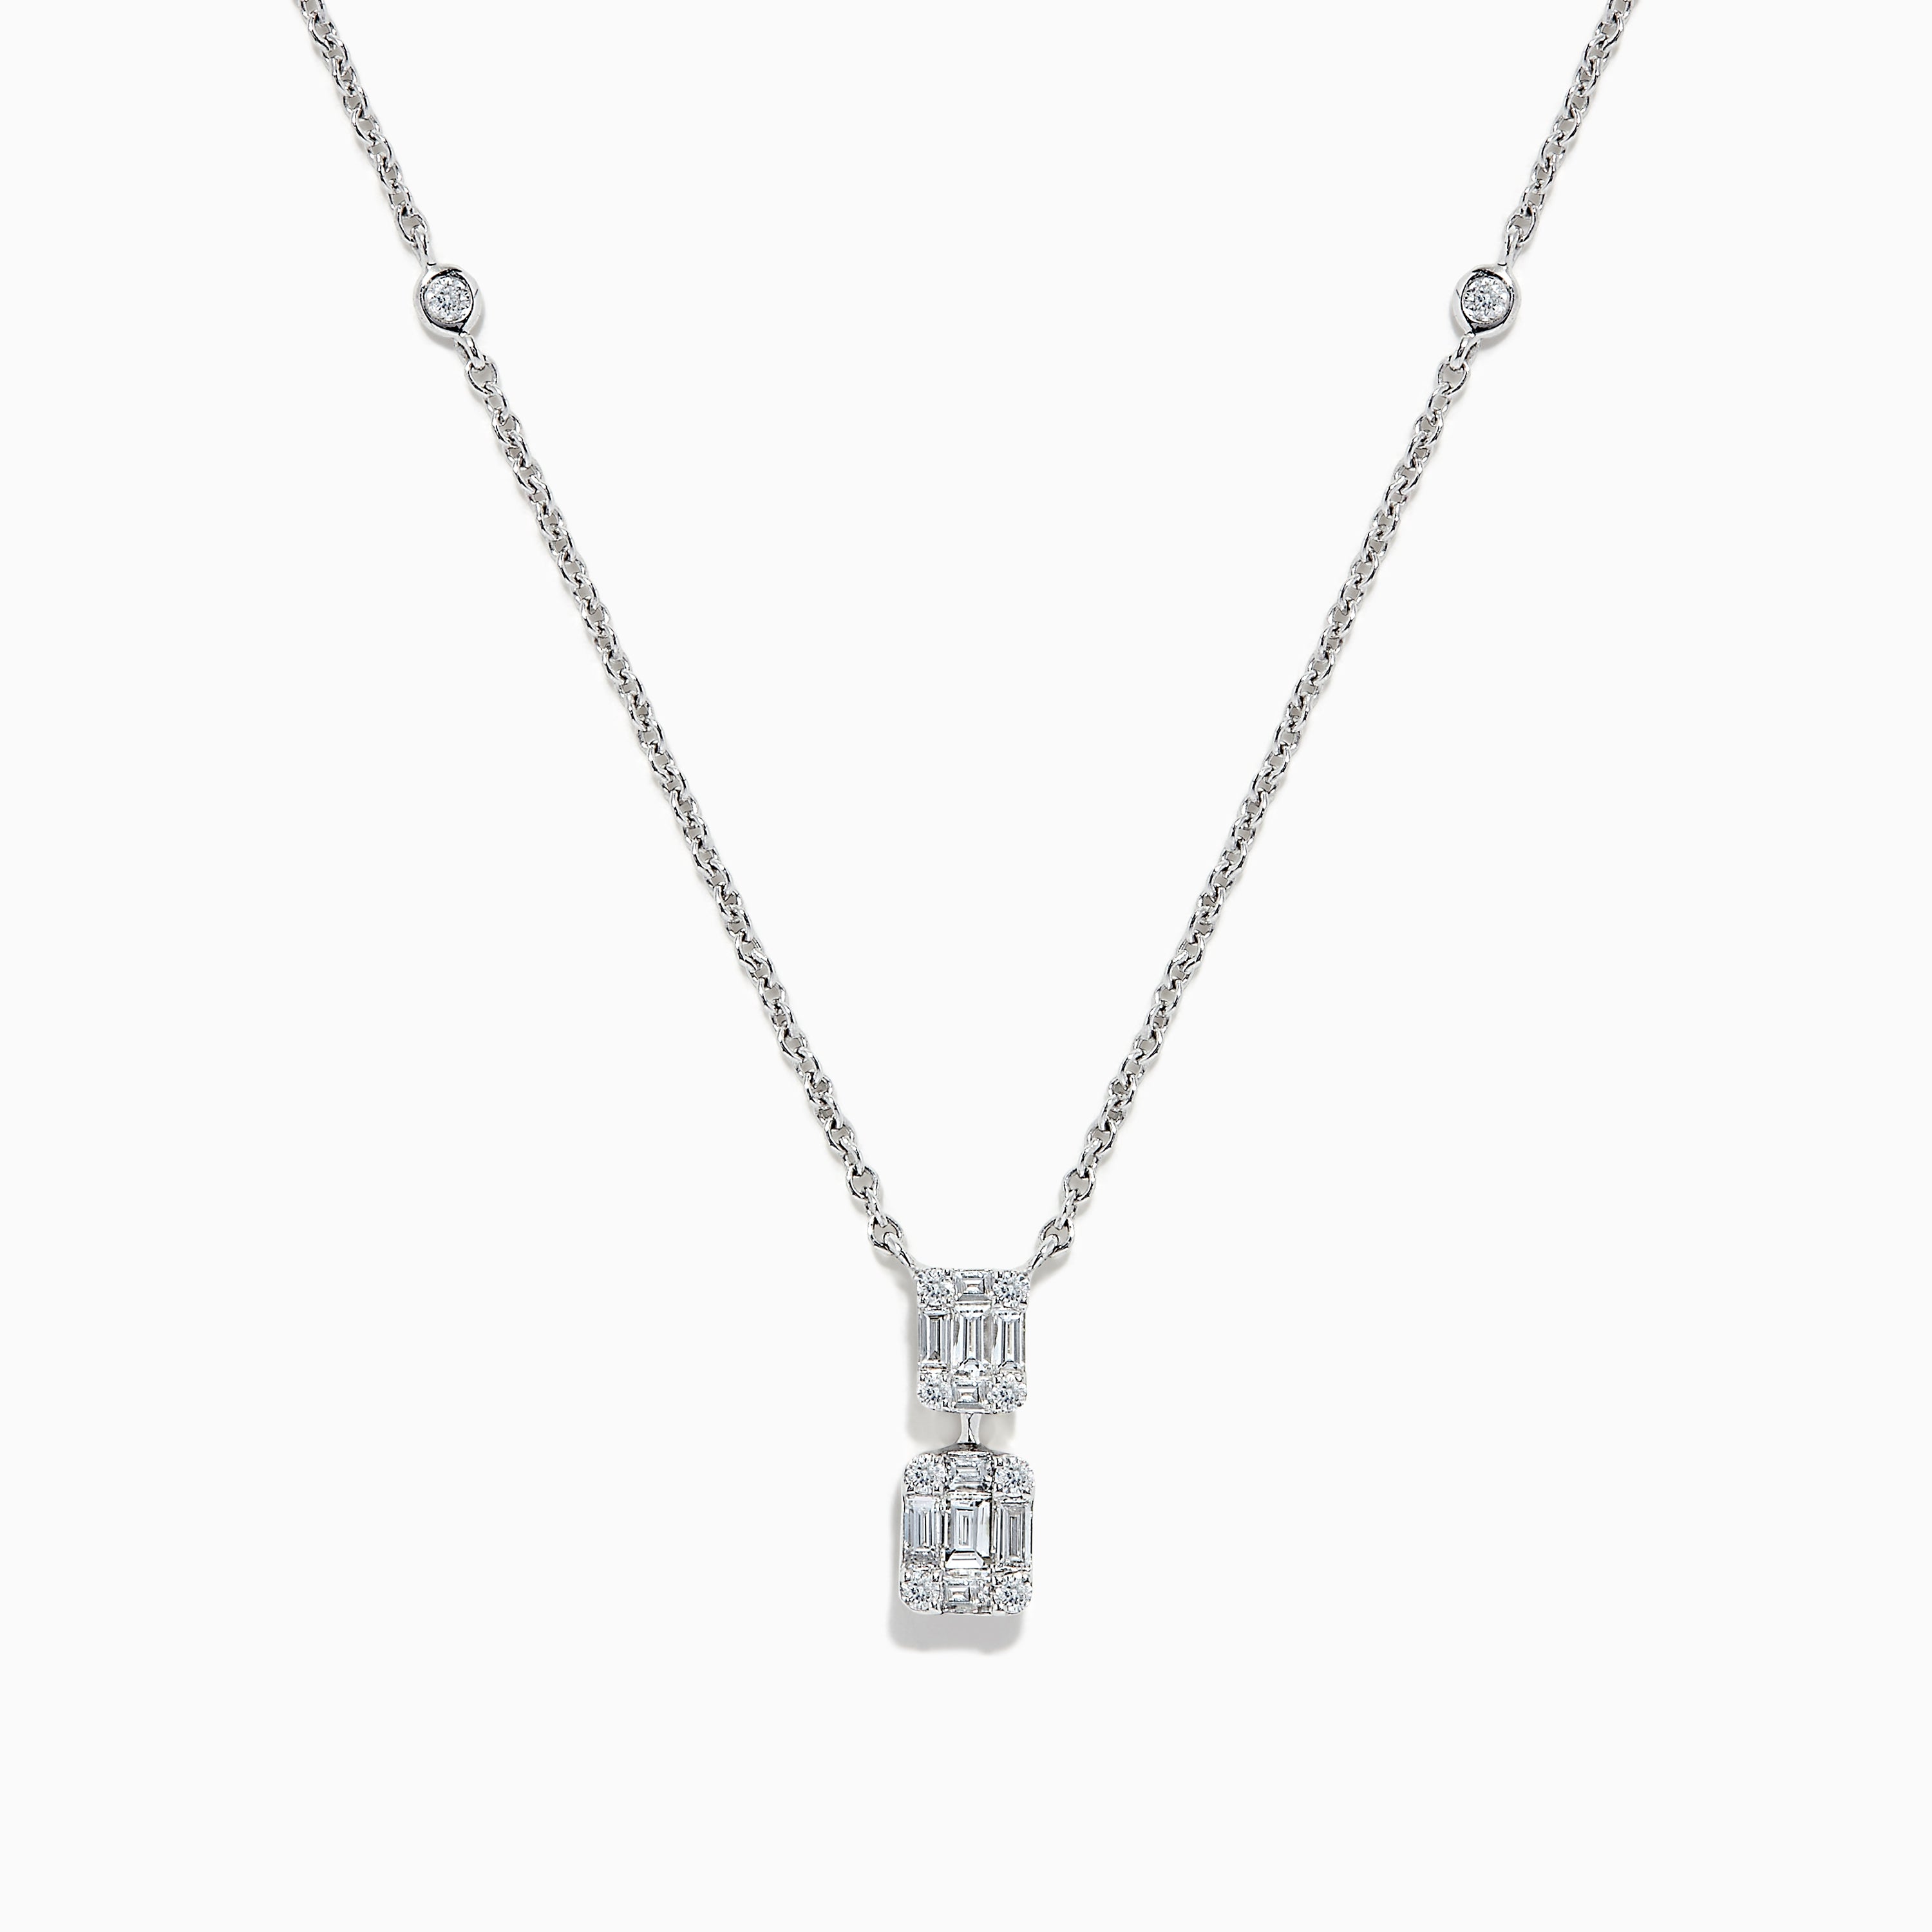 Effy Classique 14K White Gold Diamond Necklace, 0.66 TCW